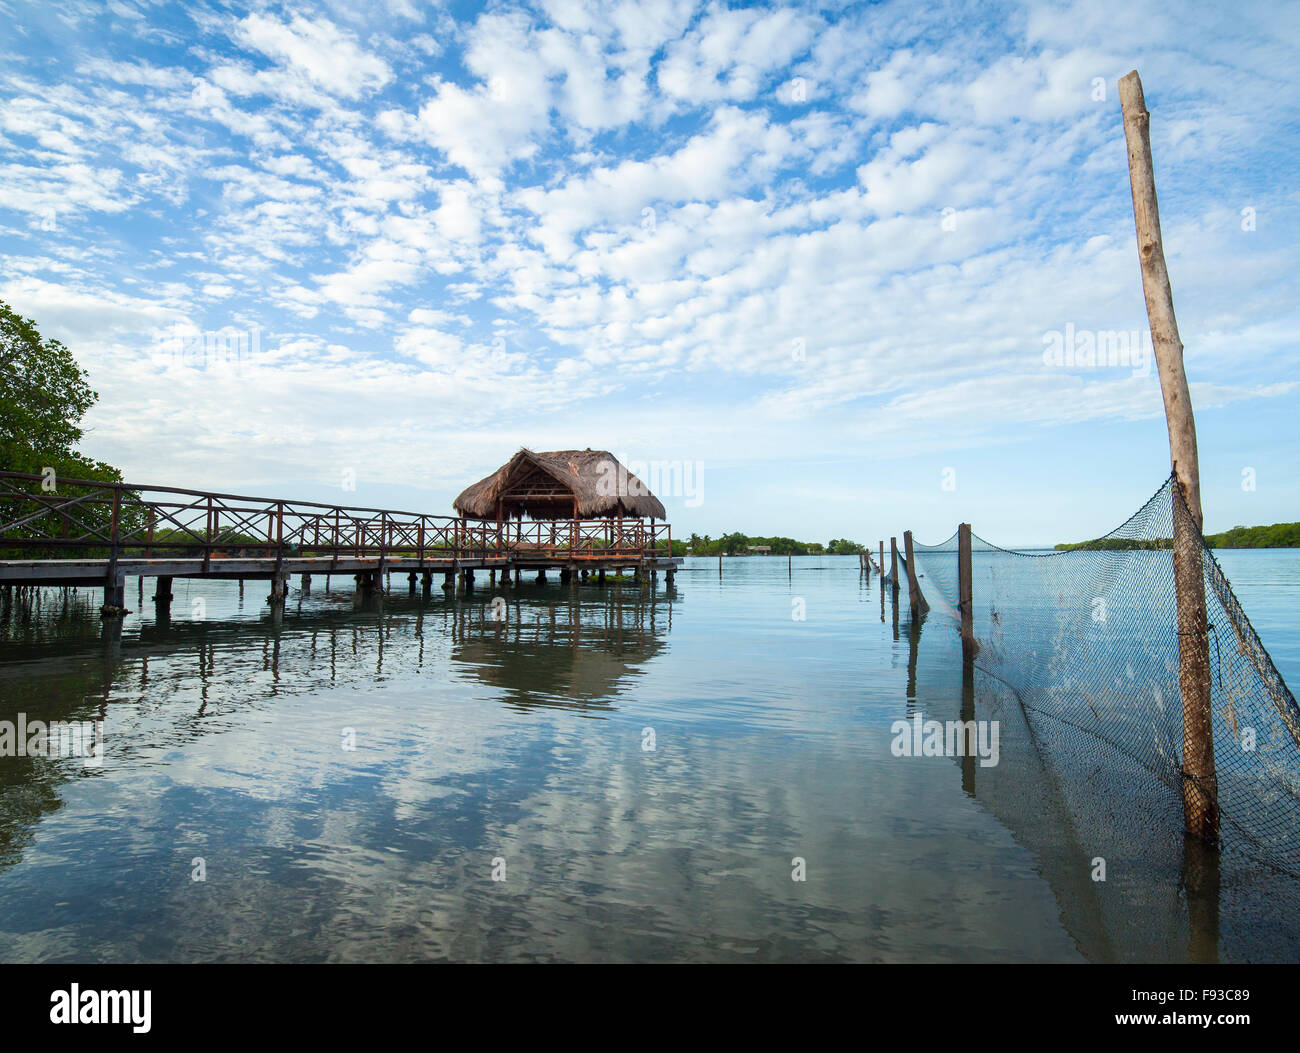 Palapa on stilts, Laguna de Mecoacan near Paraiso, Tabasco. Stock Photo